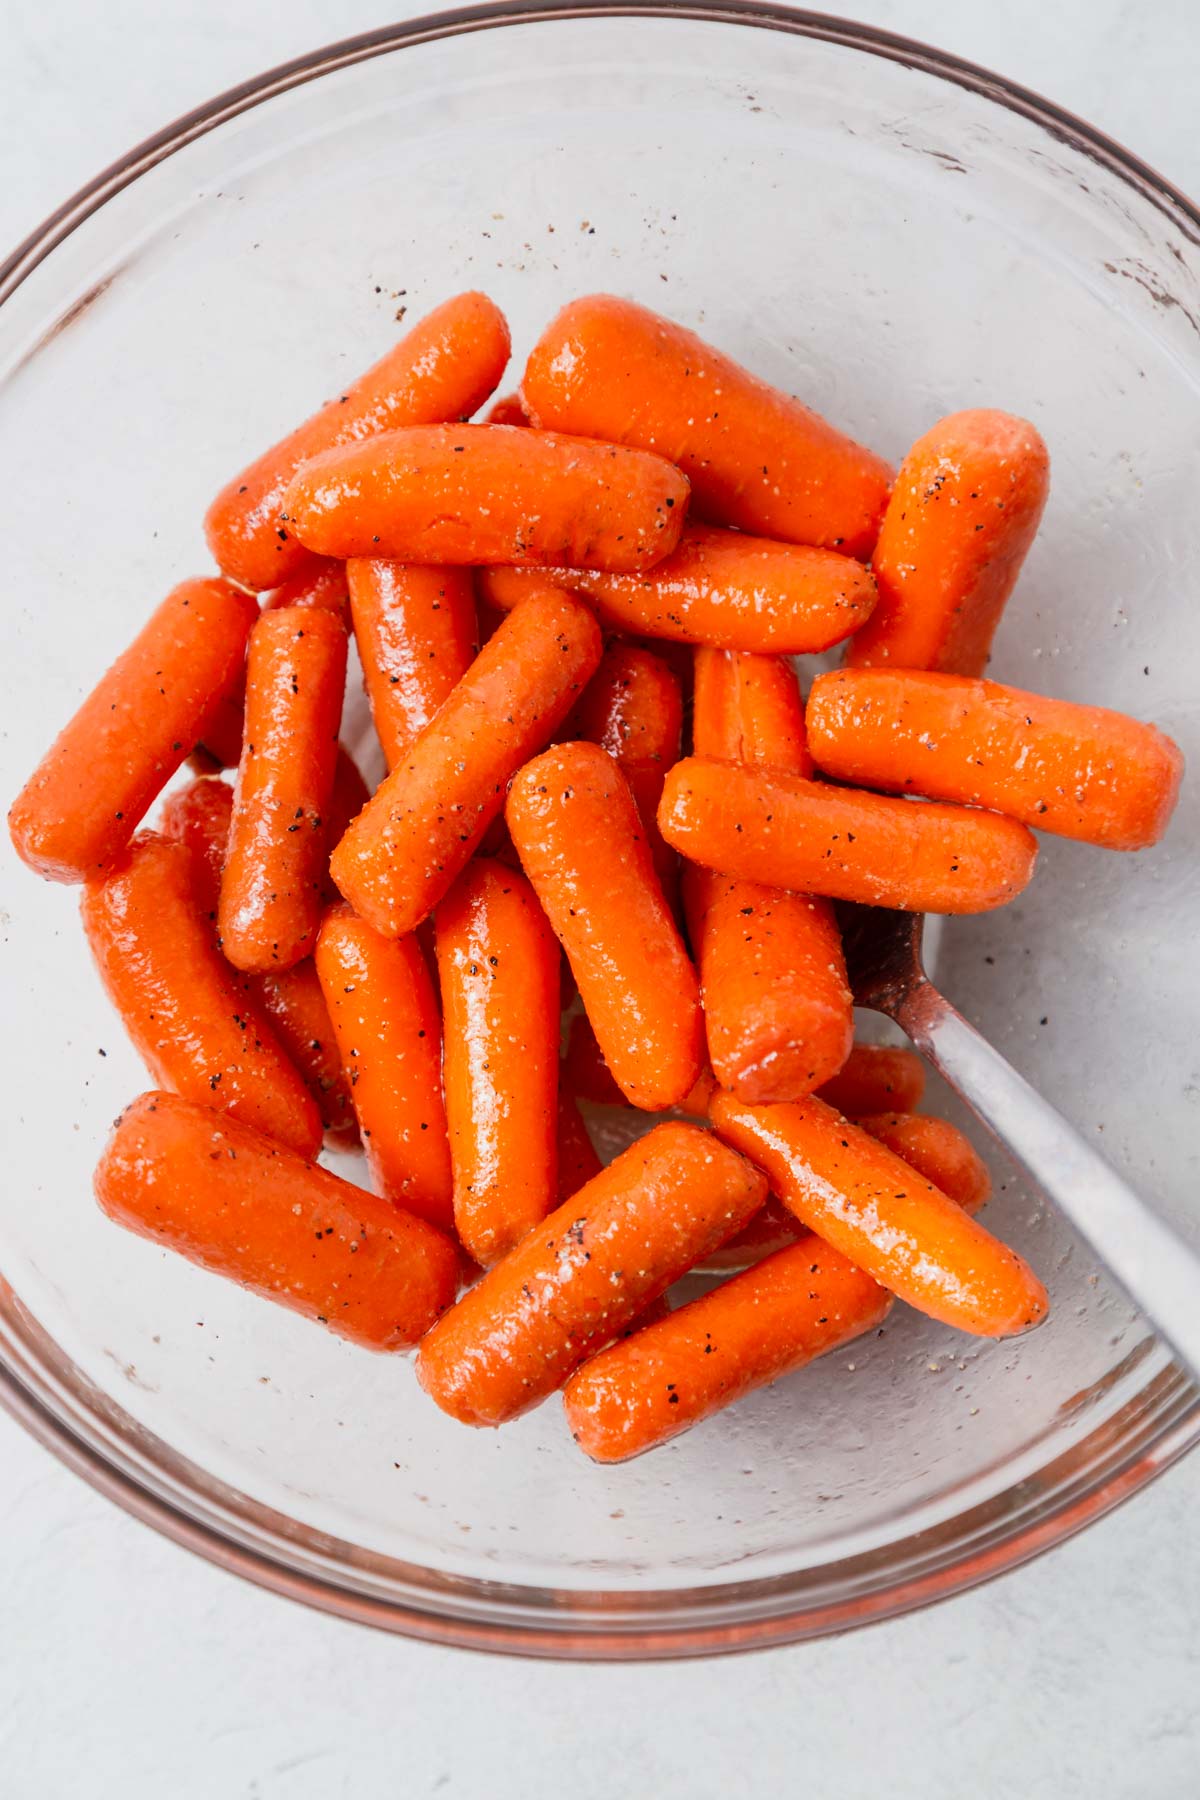 seasoned air fryer baby carrots in a bowl.